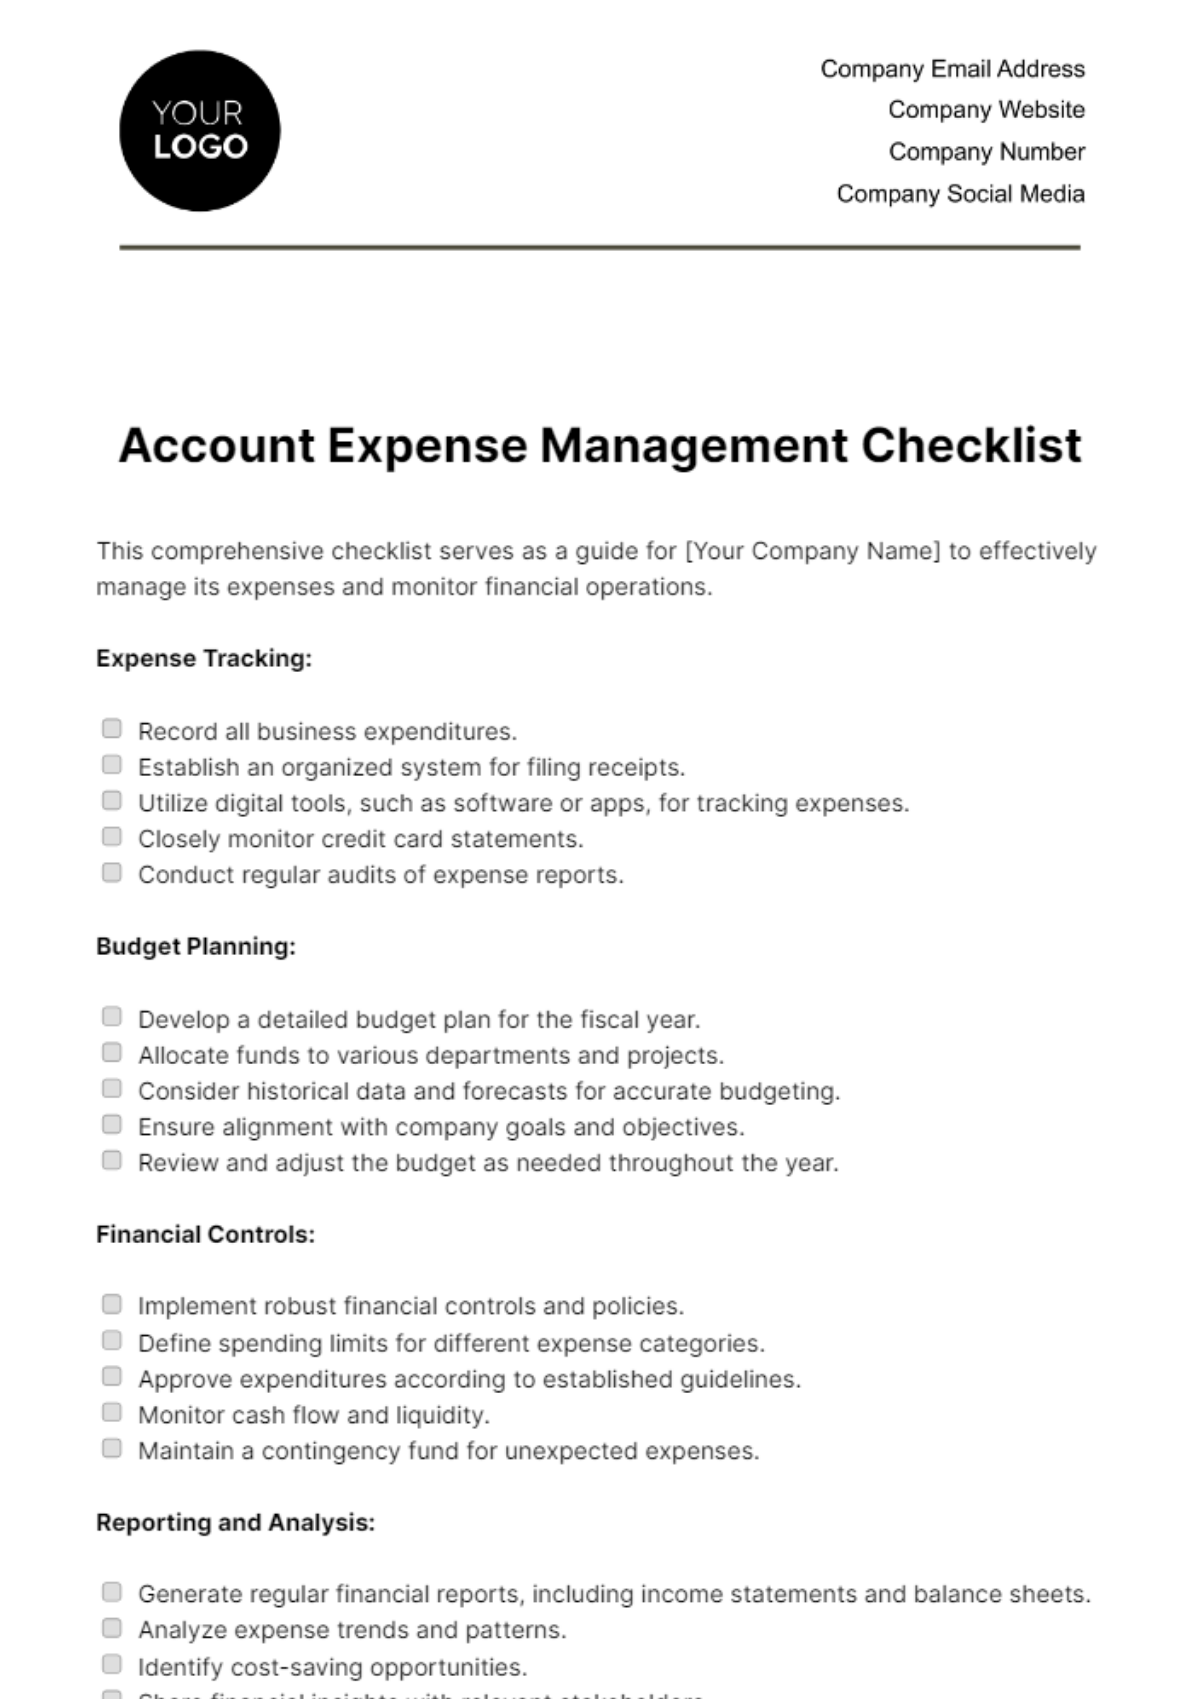 Account Expense Management Checklist Template